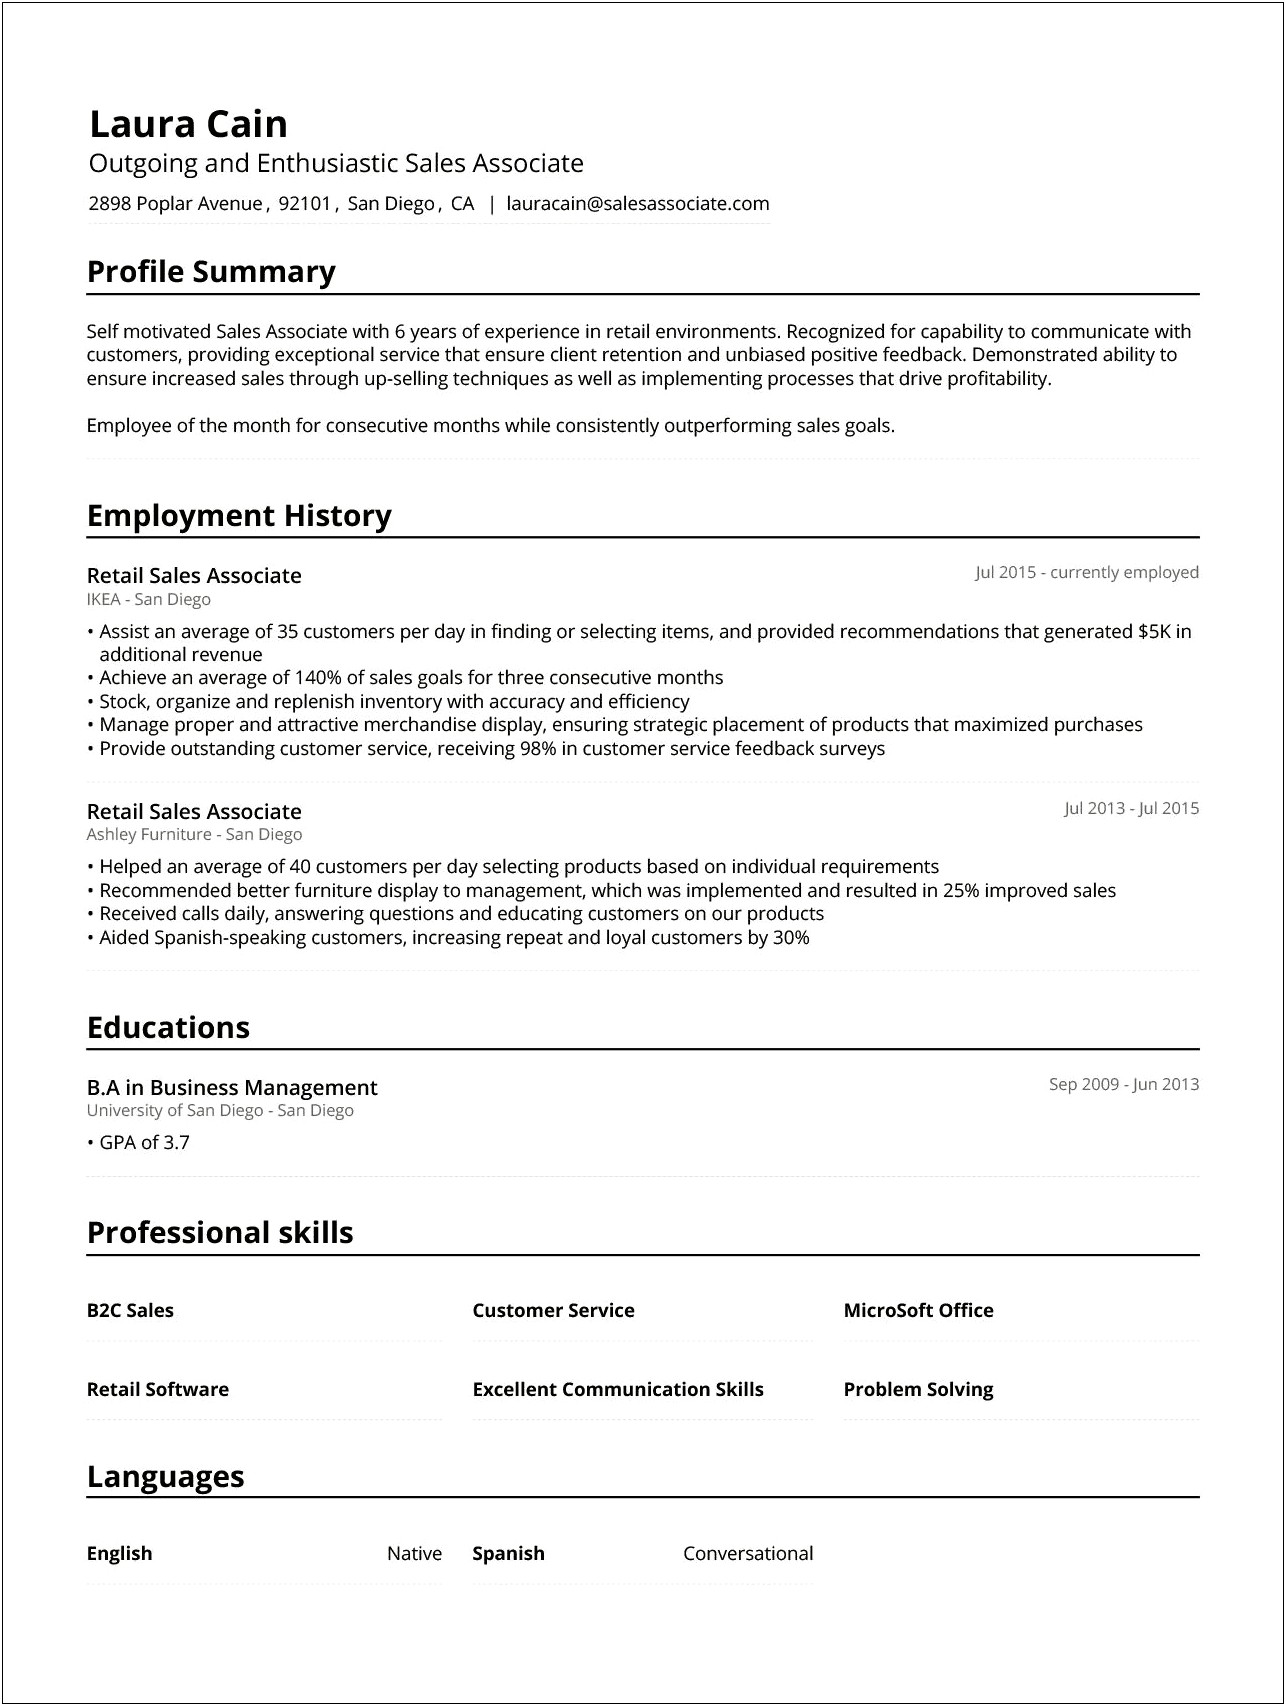 Sample Resume For Store Sales Associate